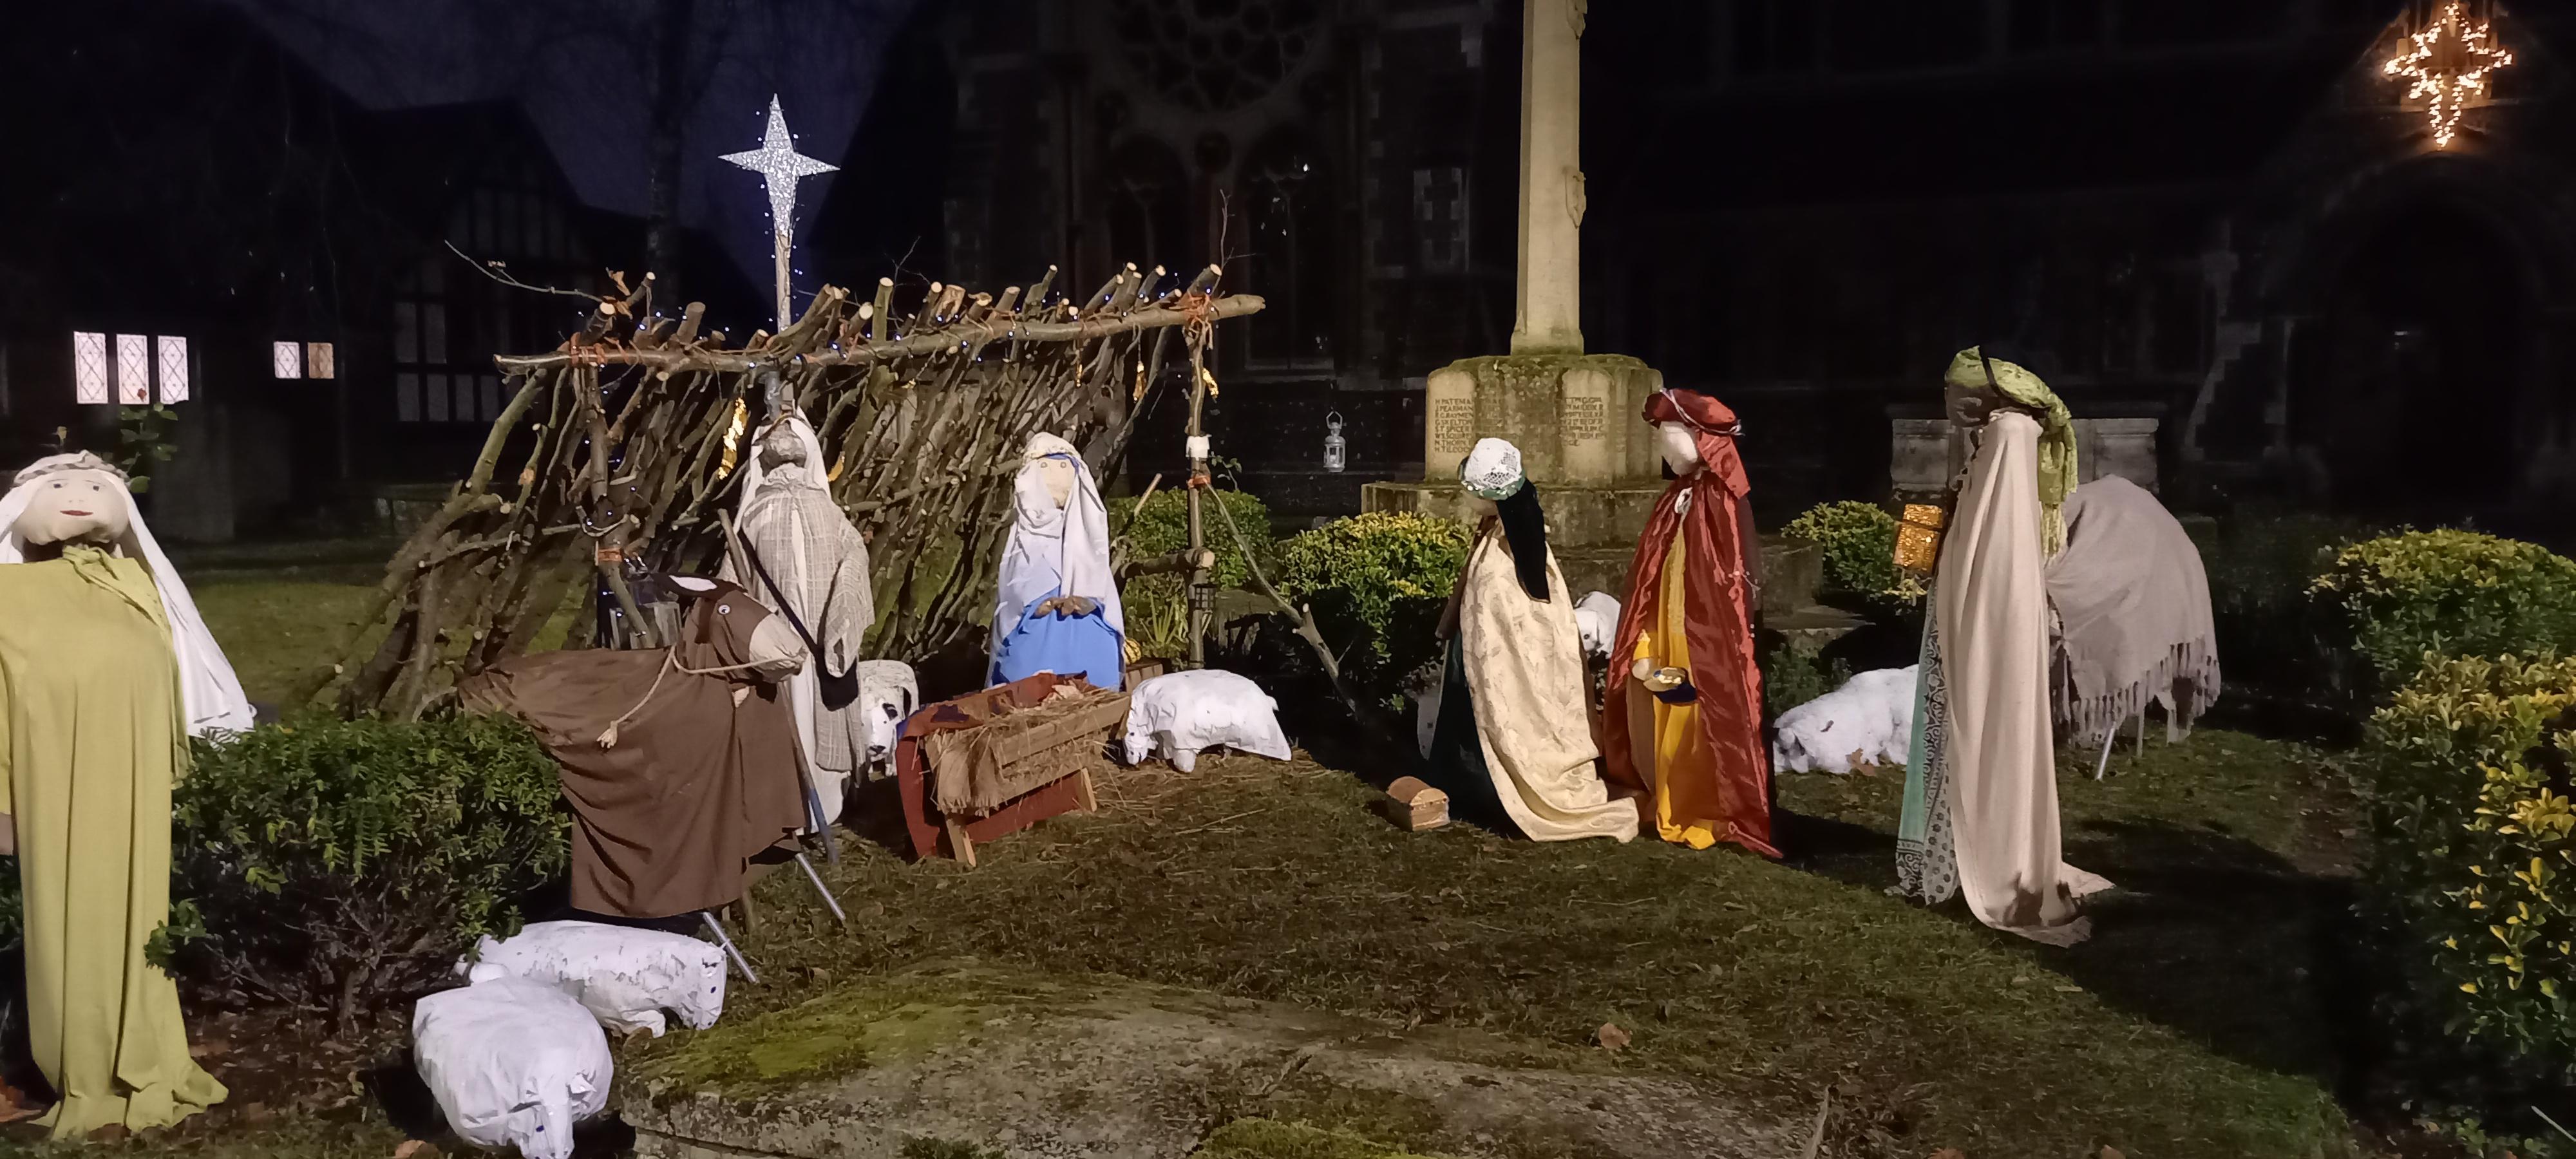 Nativity Scene January 2021